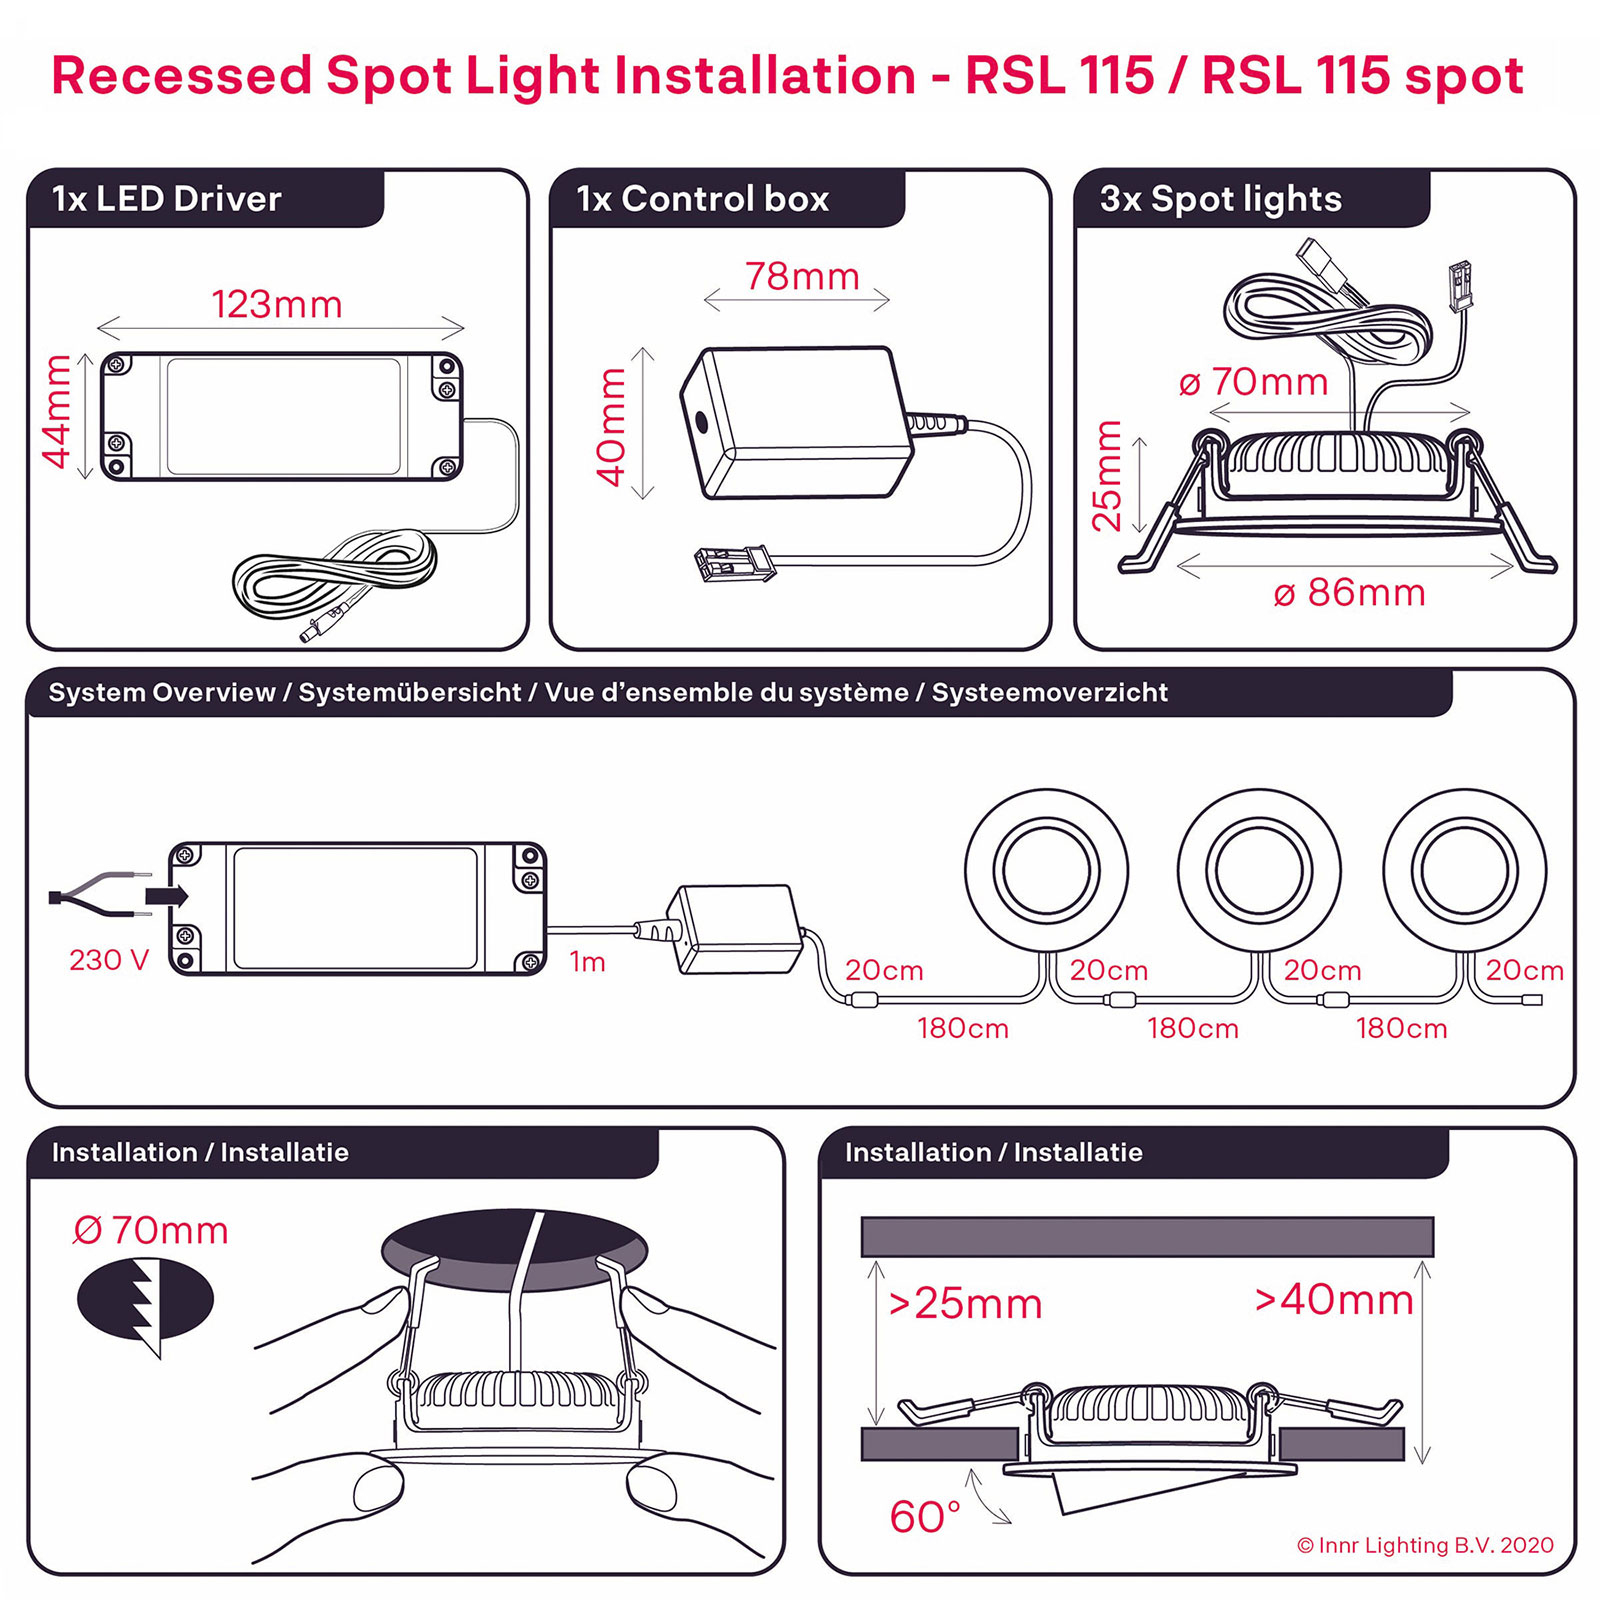 Innr LED-Einbauspot RSL 115, 3er-Set mit Anschluss